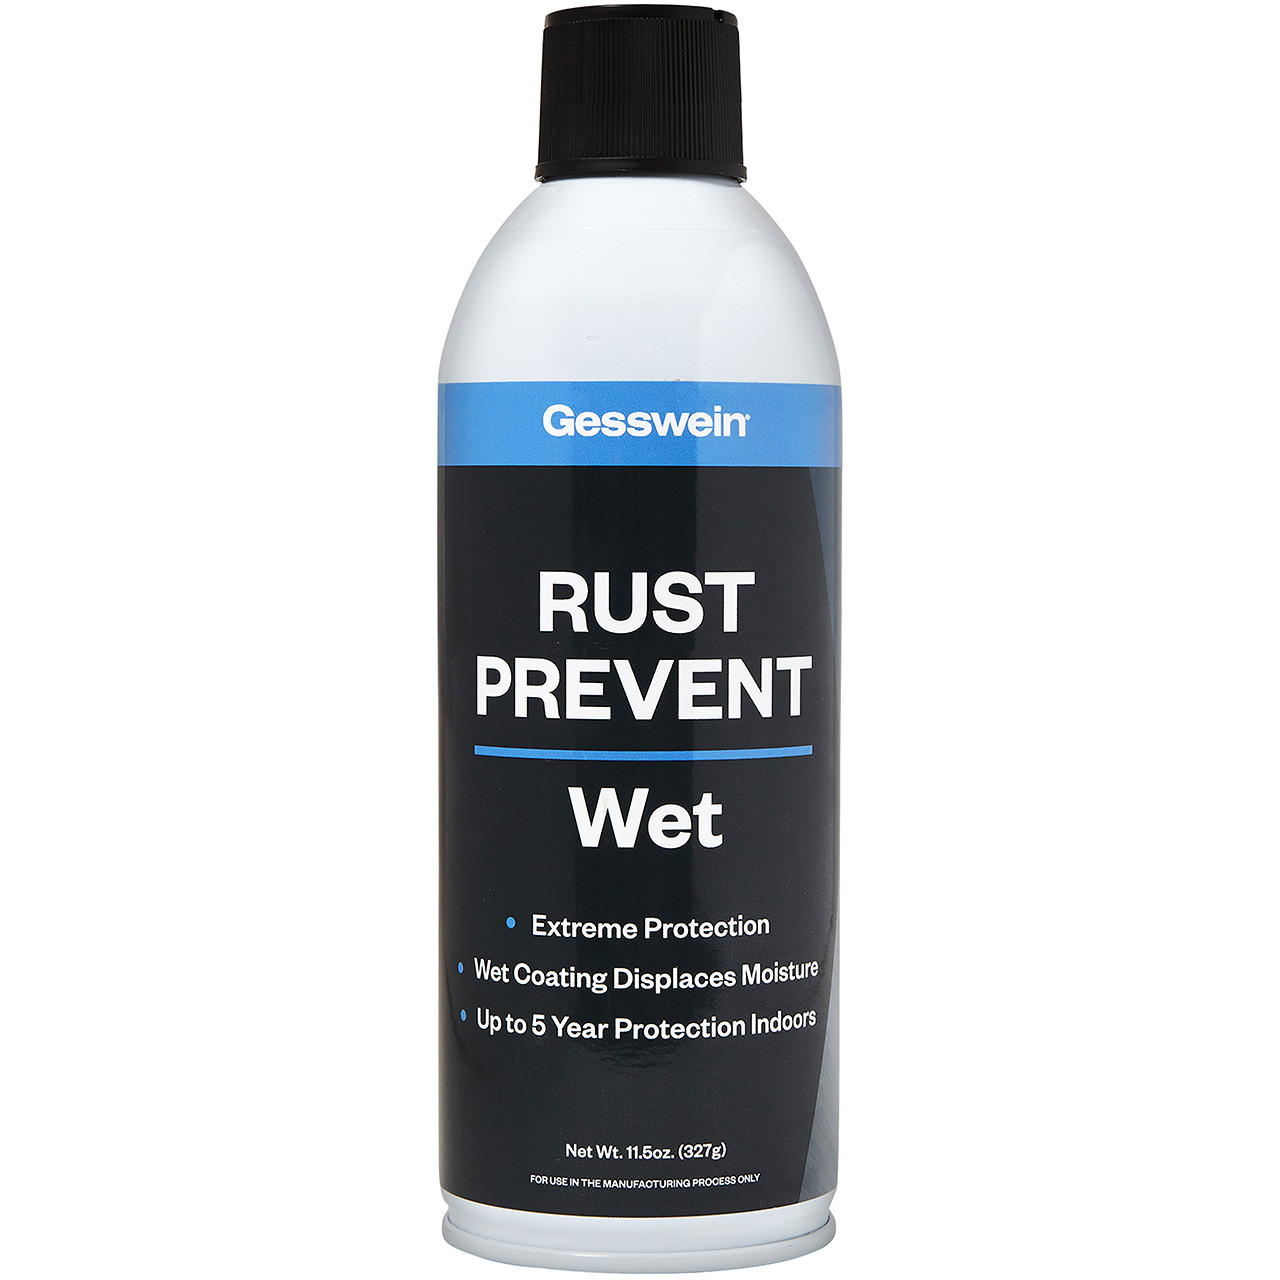 Gesswein® Rust Prevent Wet (Case of 12 cans)